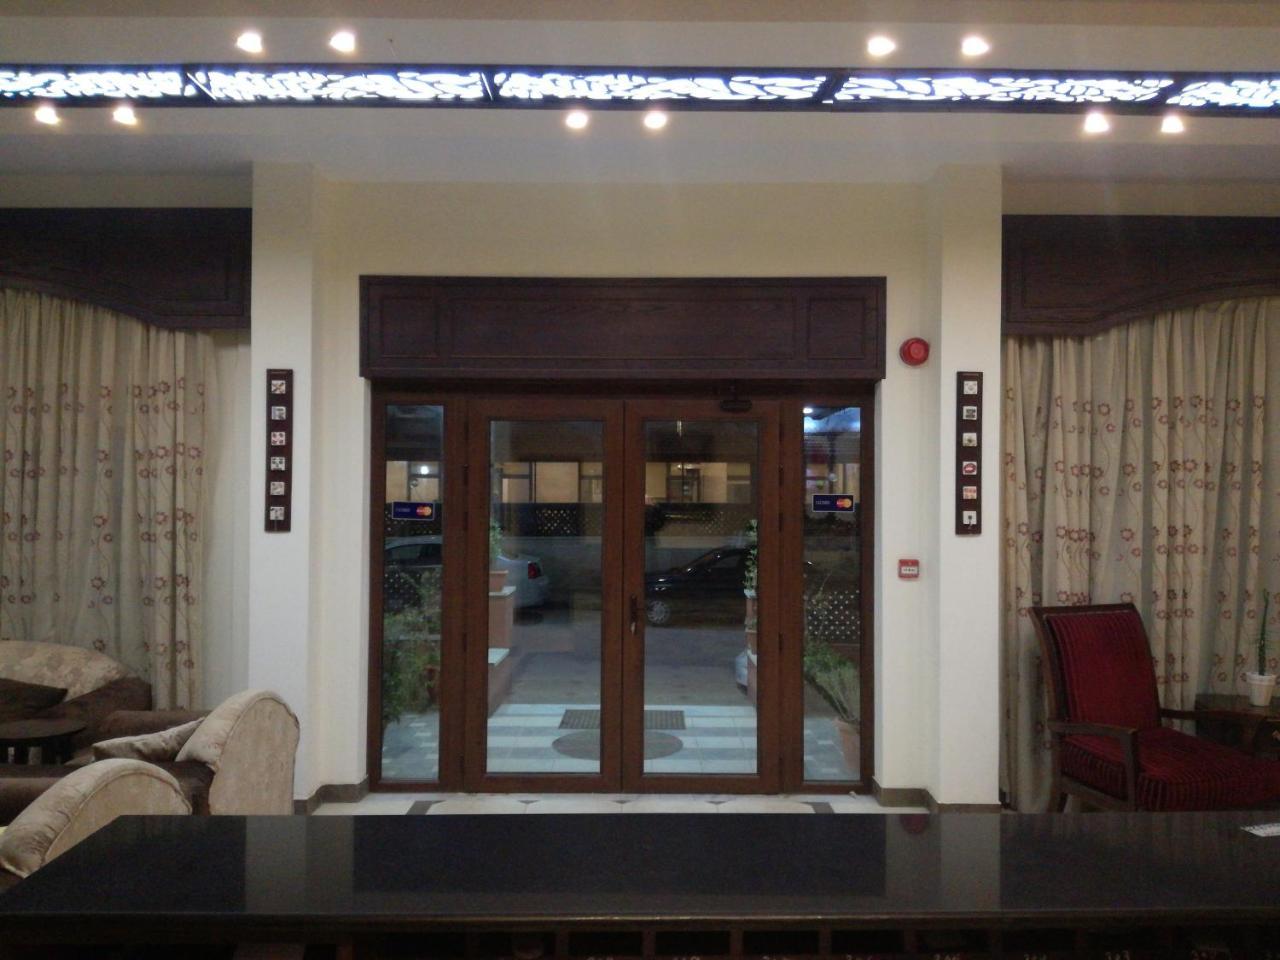 Rumman Hotel Madaba Exterior foto